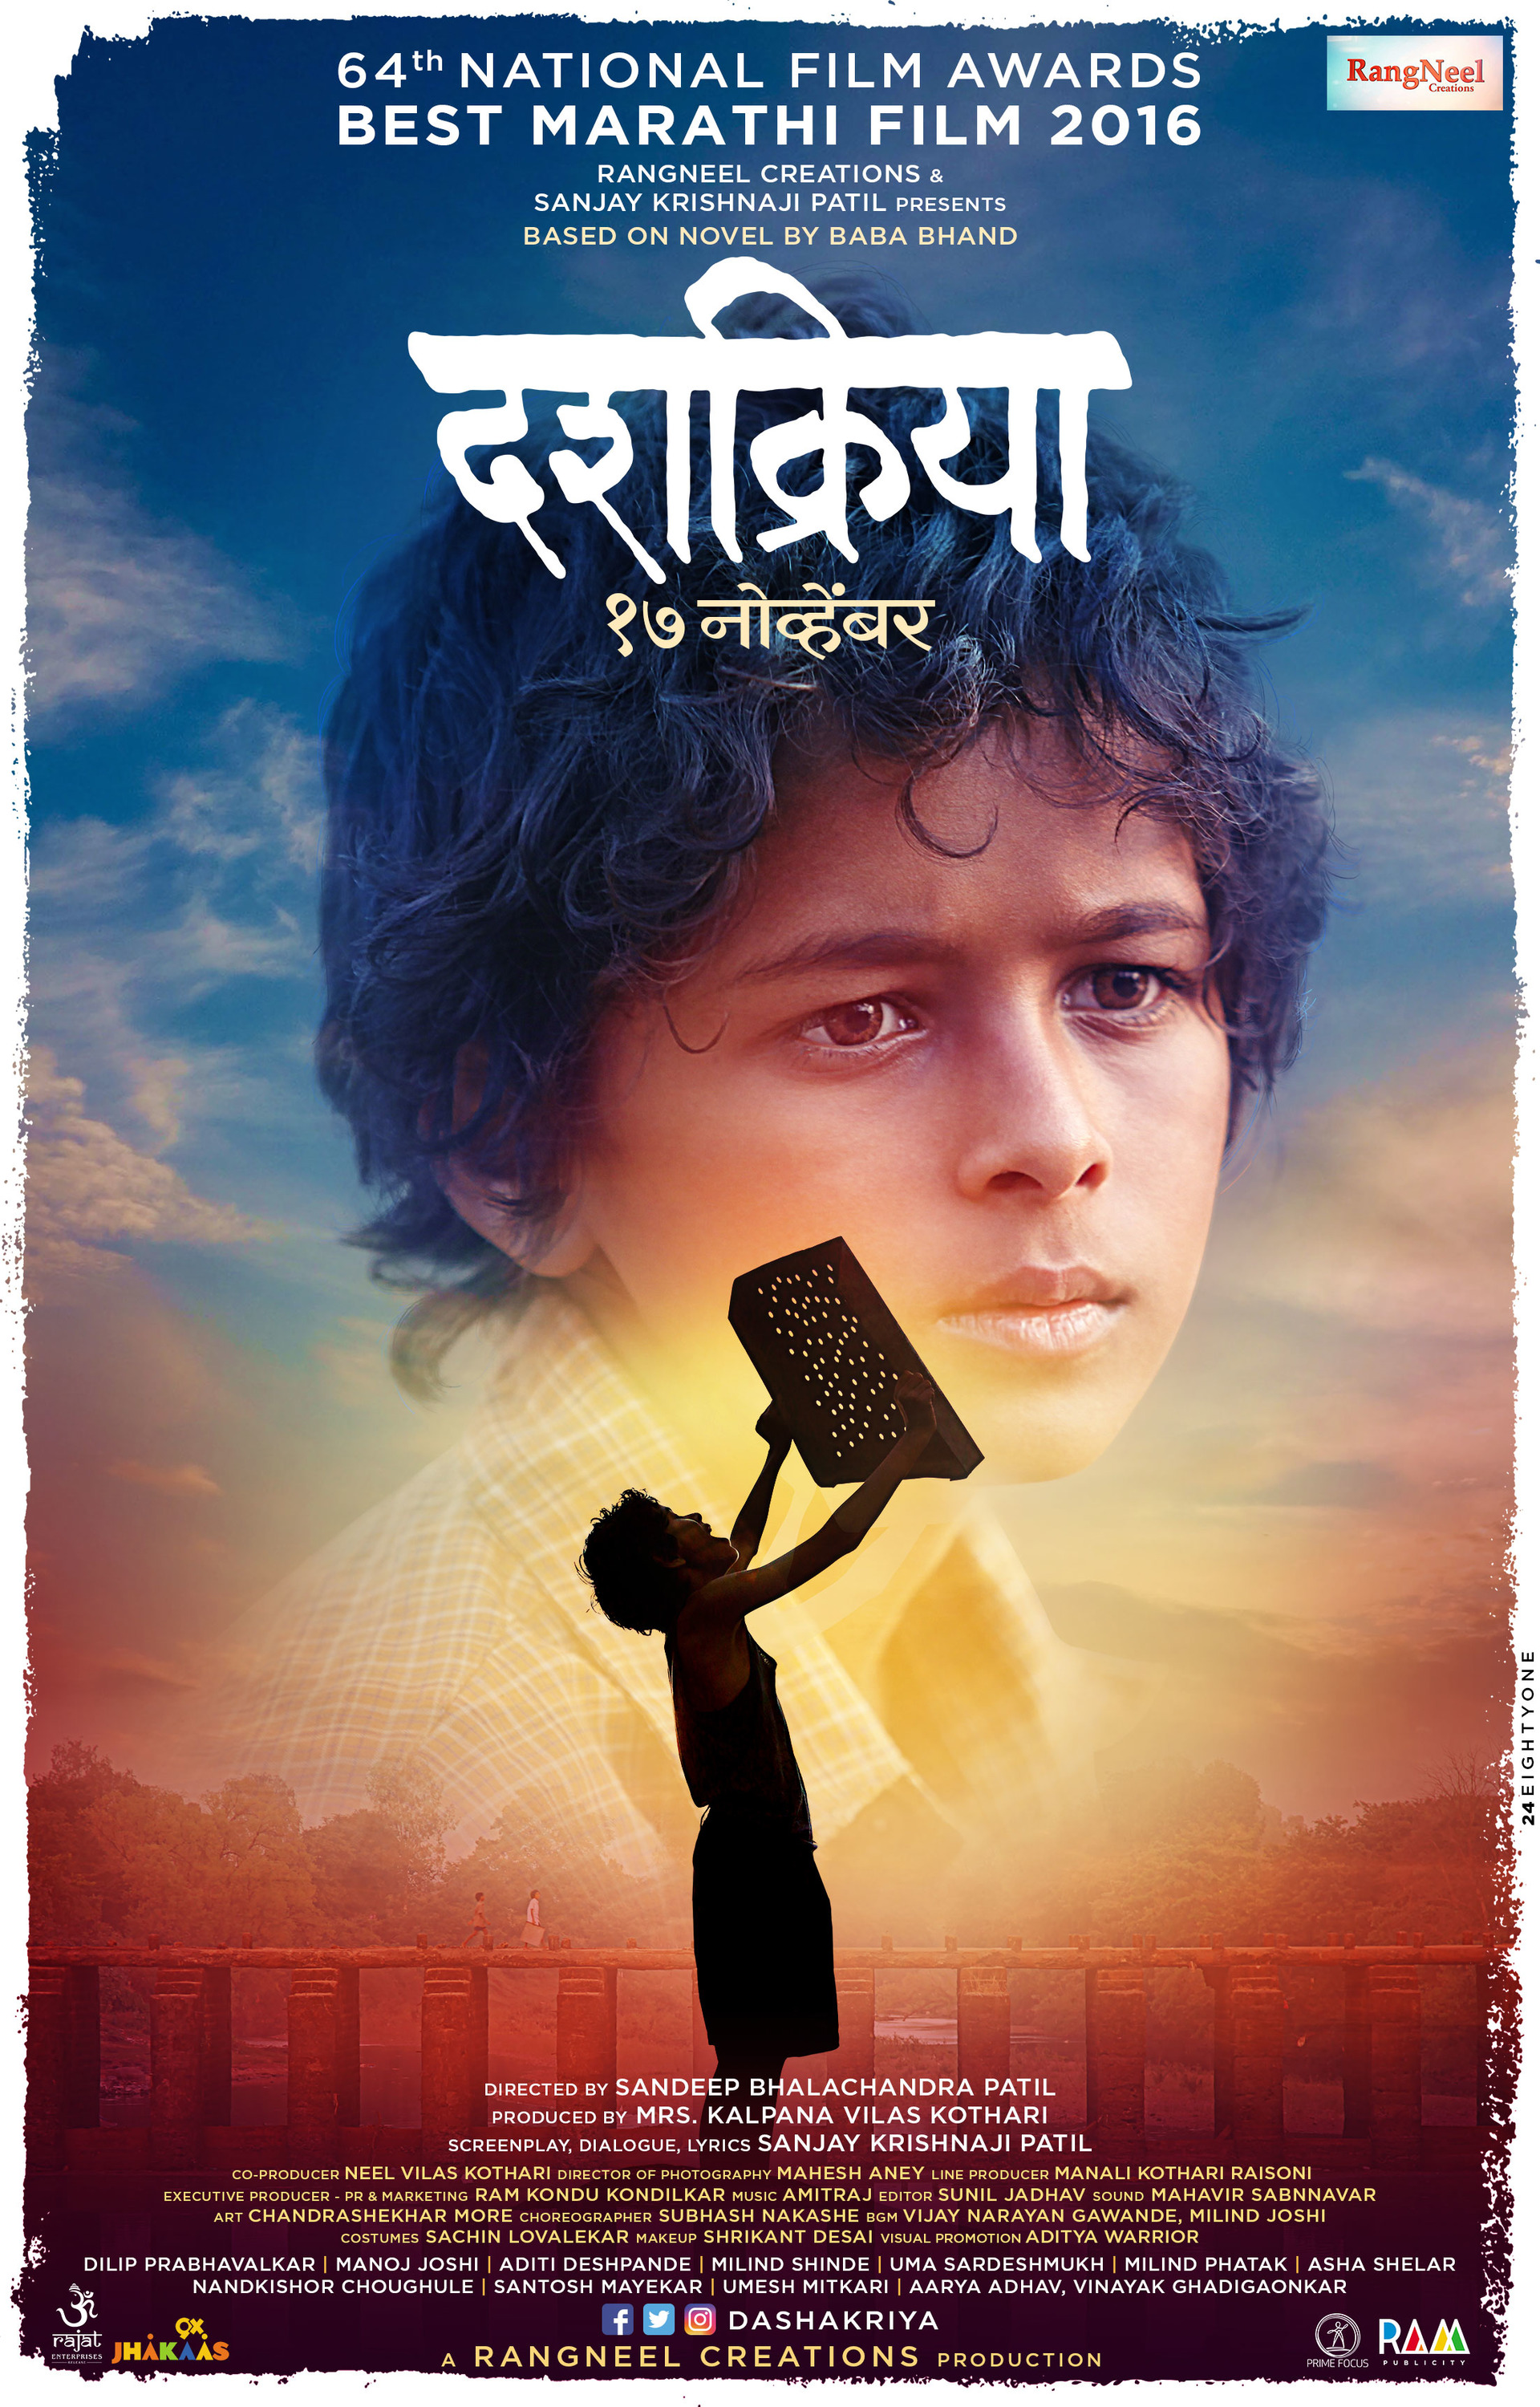 Mega Sized Movie Poster Image for Dashakriya (#5 of 5)